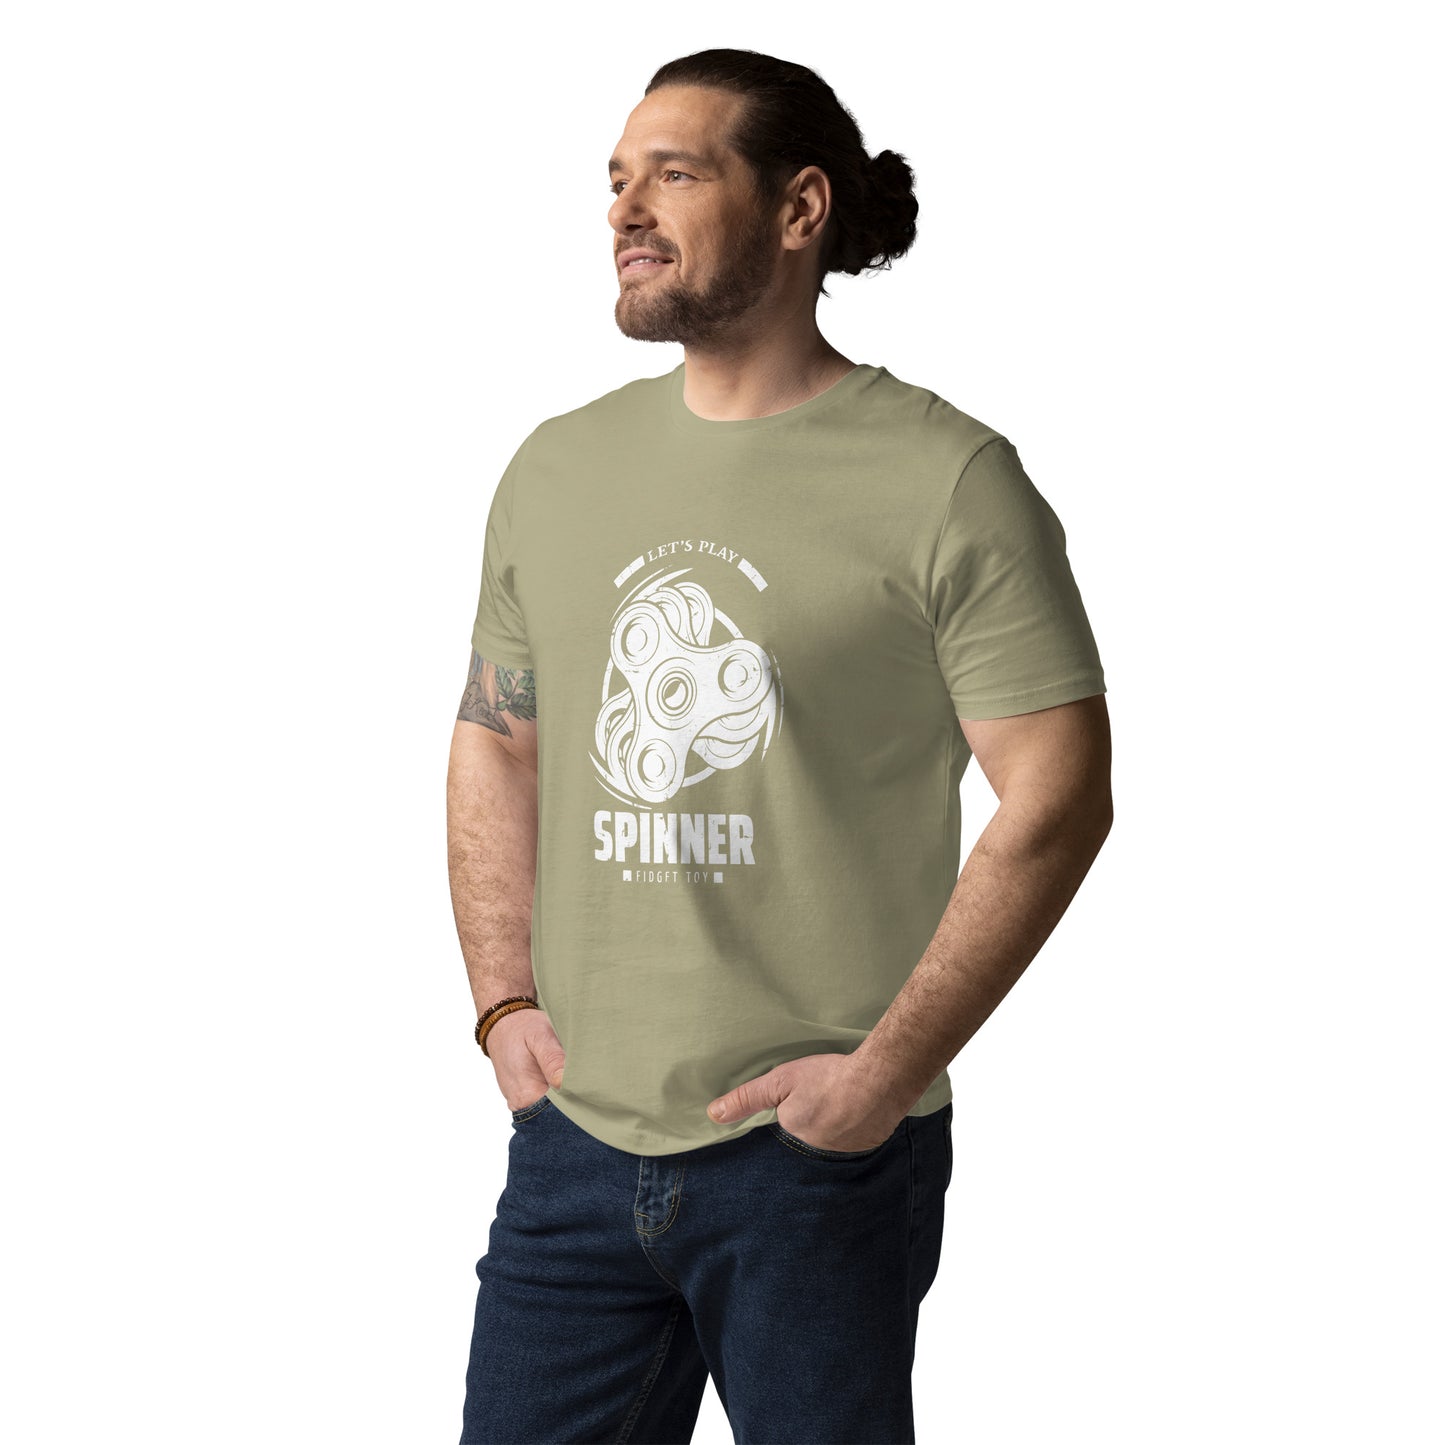 Spinner Player - Unisex organic cotton t-shirt - HobbyMeFree